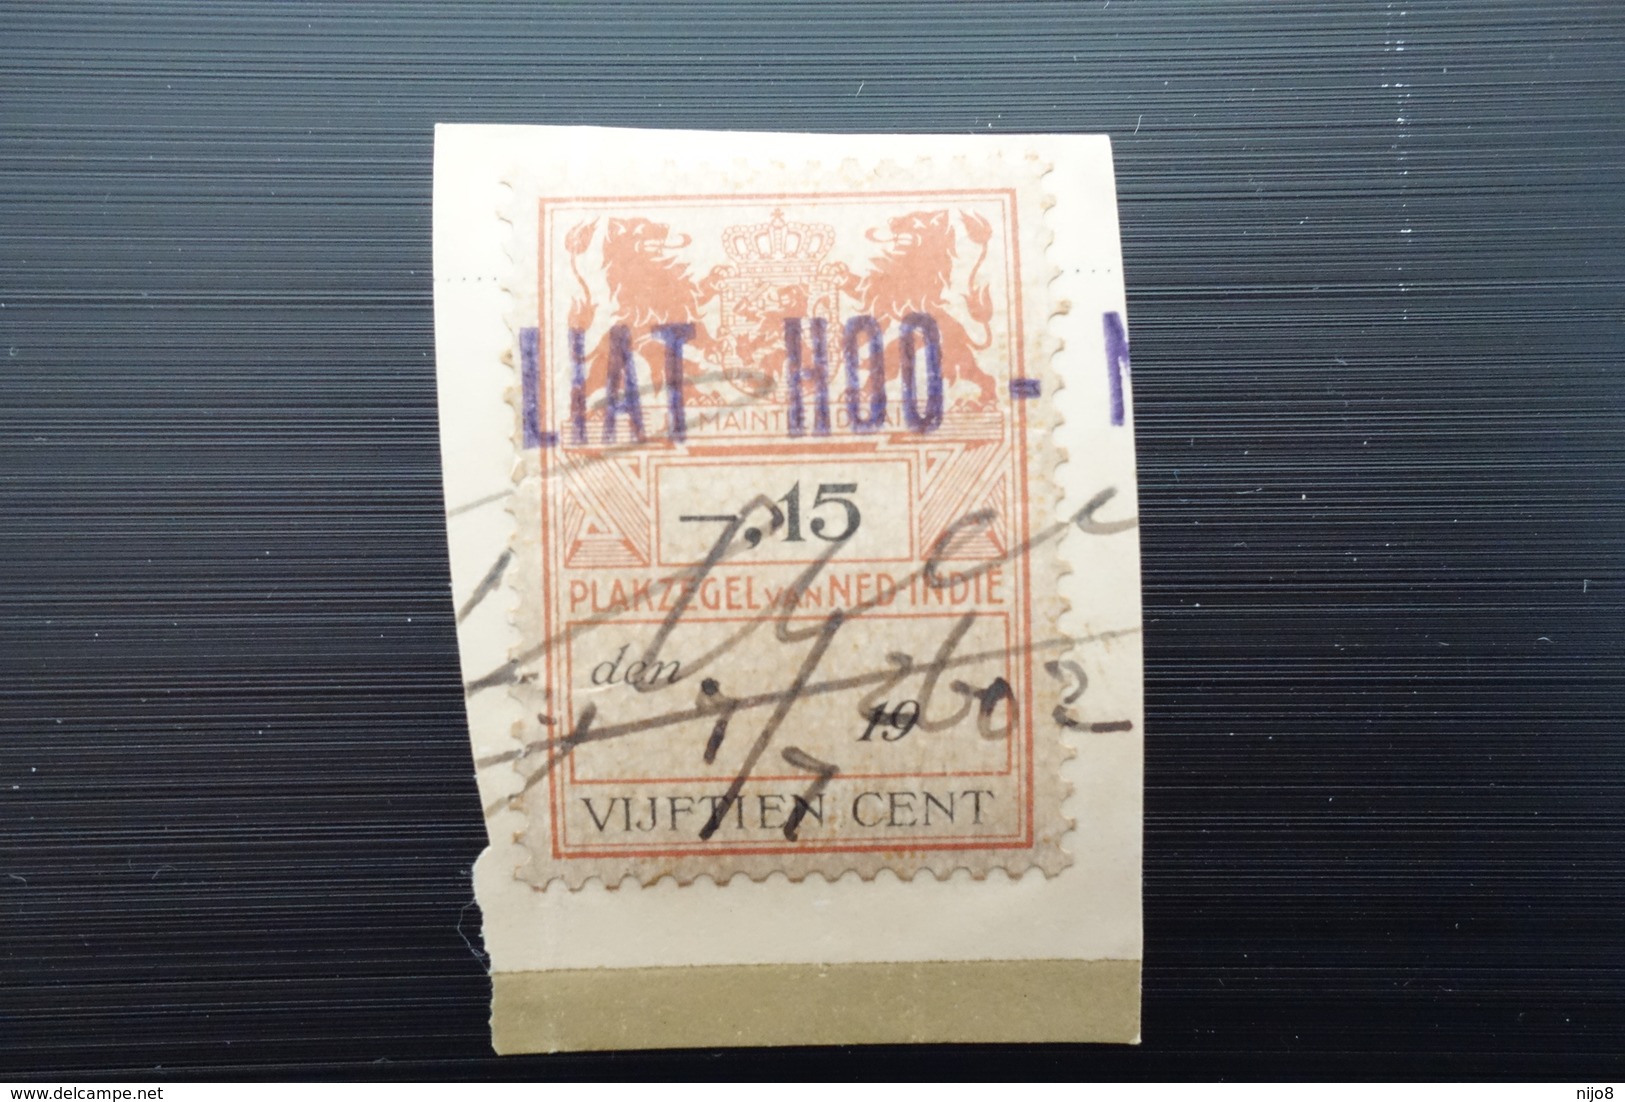 NETHERLAND INDIES : PLAKZEGEL 15 Cent, NON OVPT On Fragment (4.7.2602) - India Holandeses